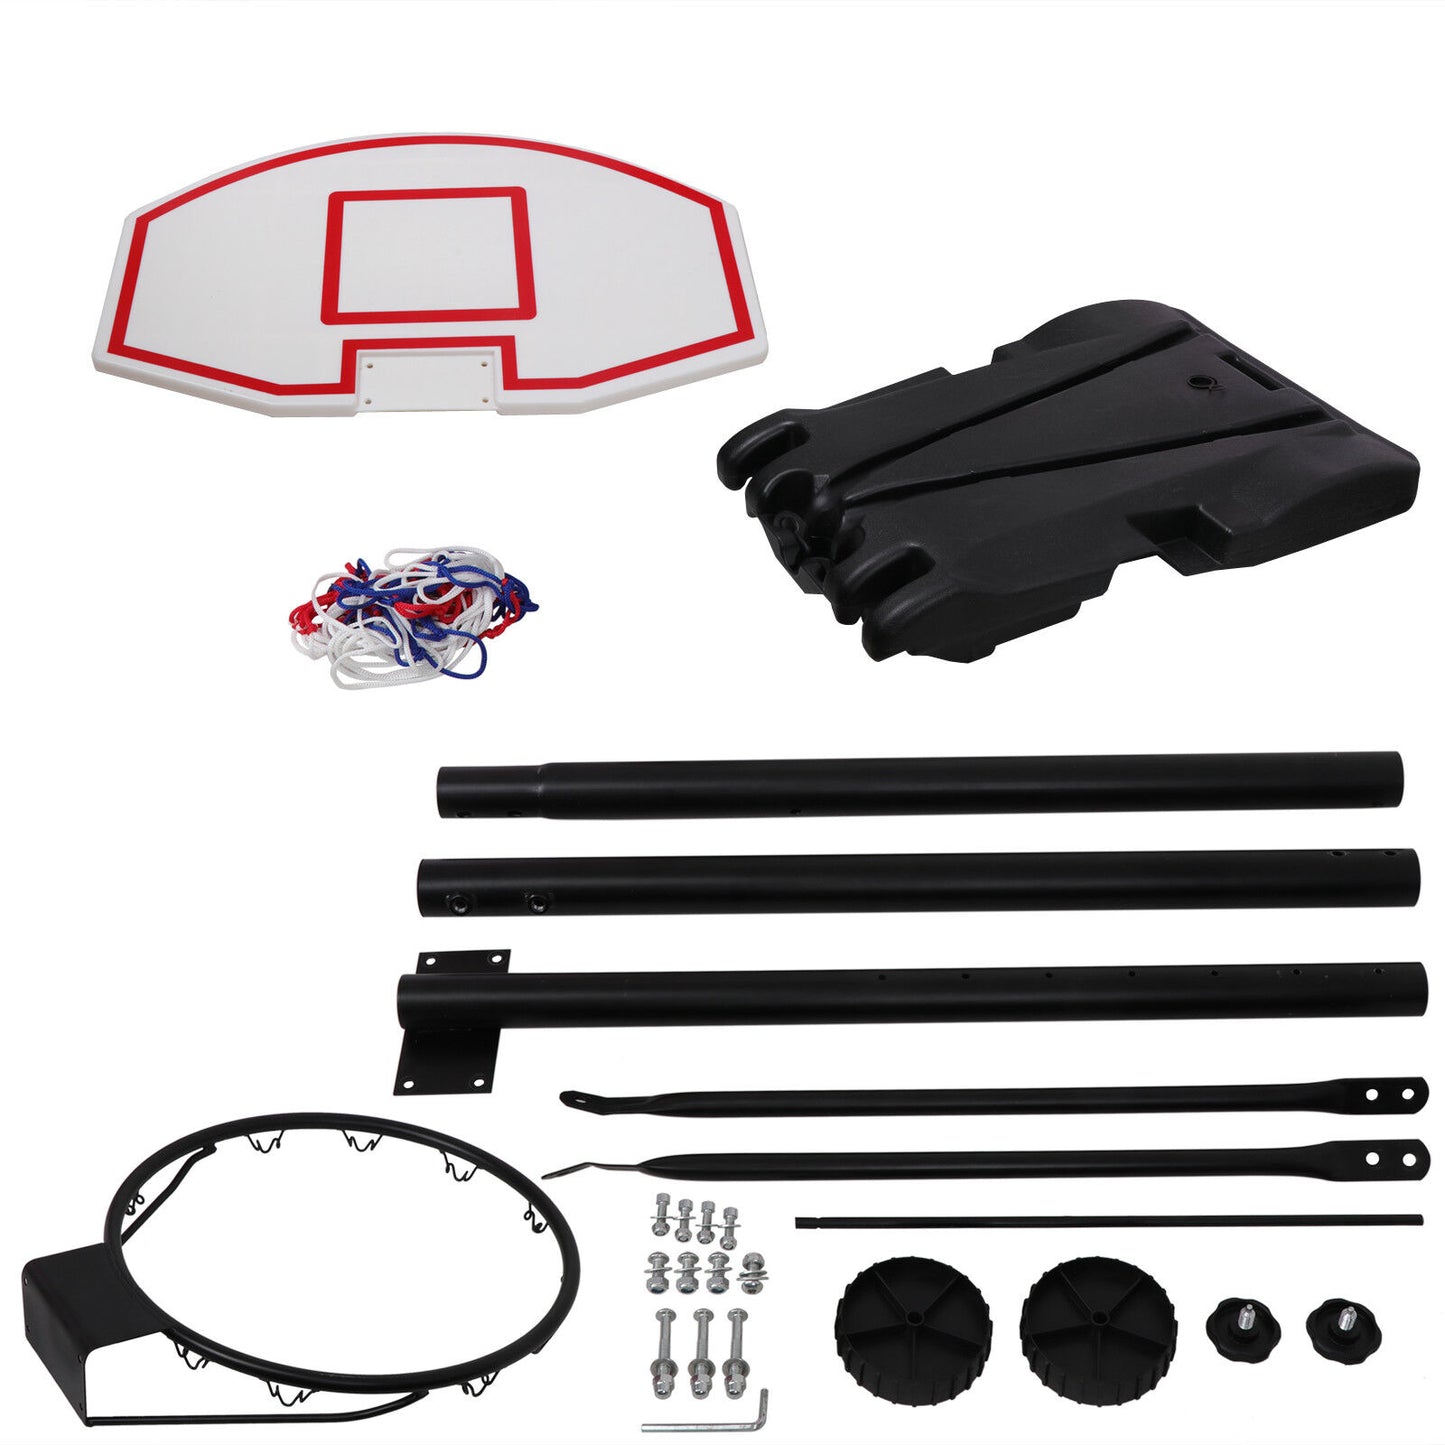 Basketball Portable System Adjustable Hoop Backboard Yard Outdoor Kids Sports